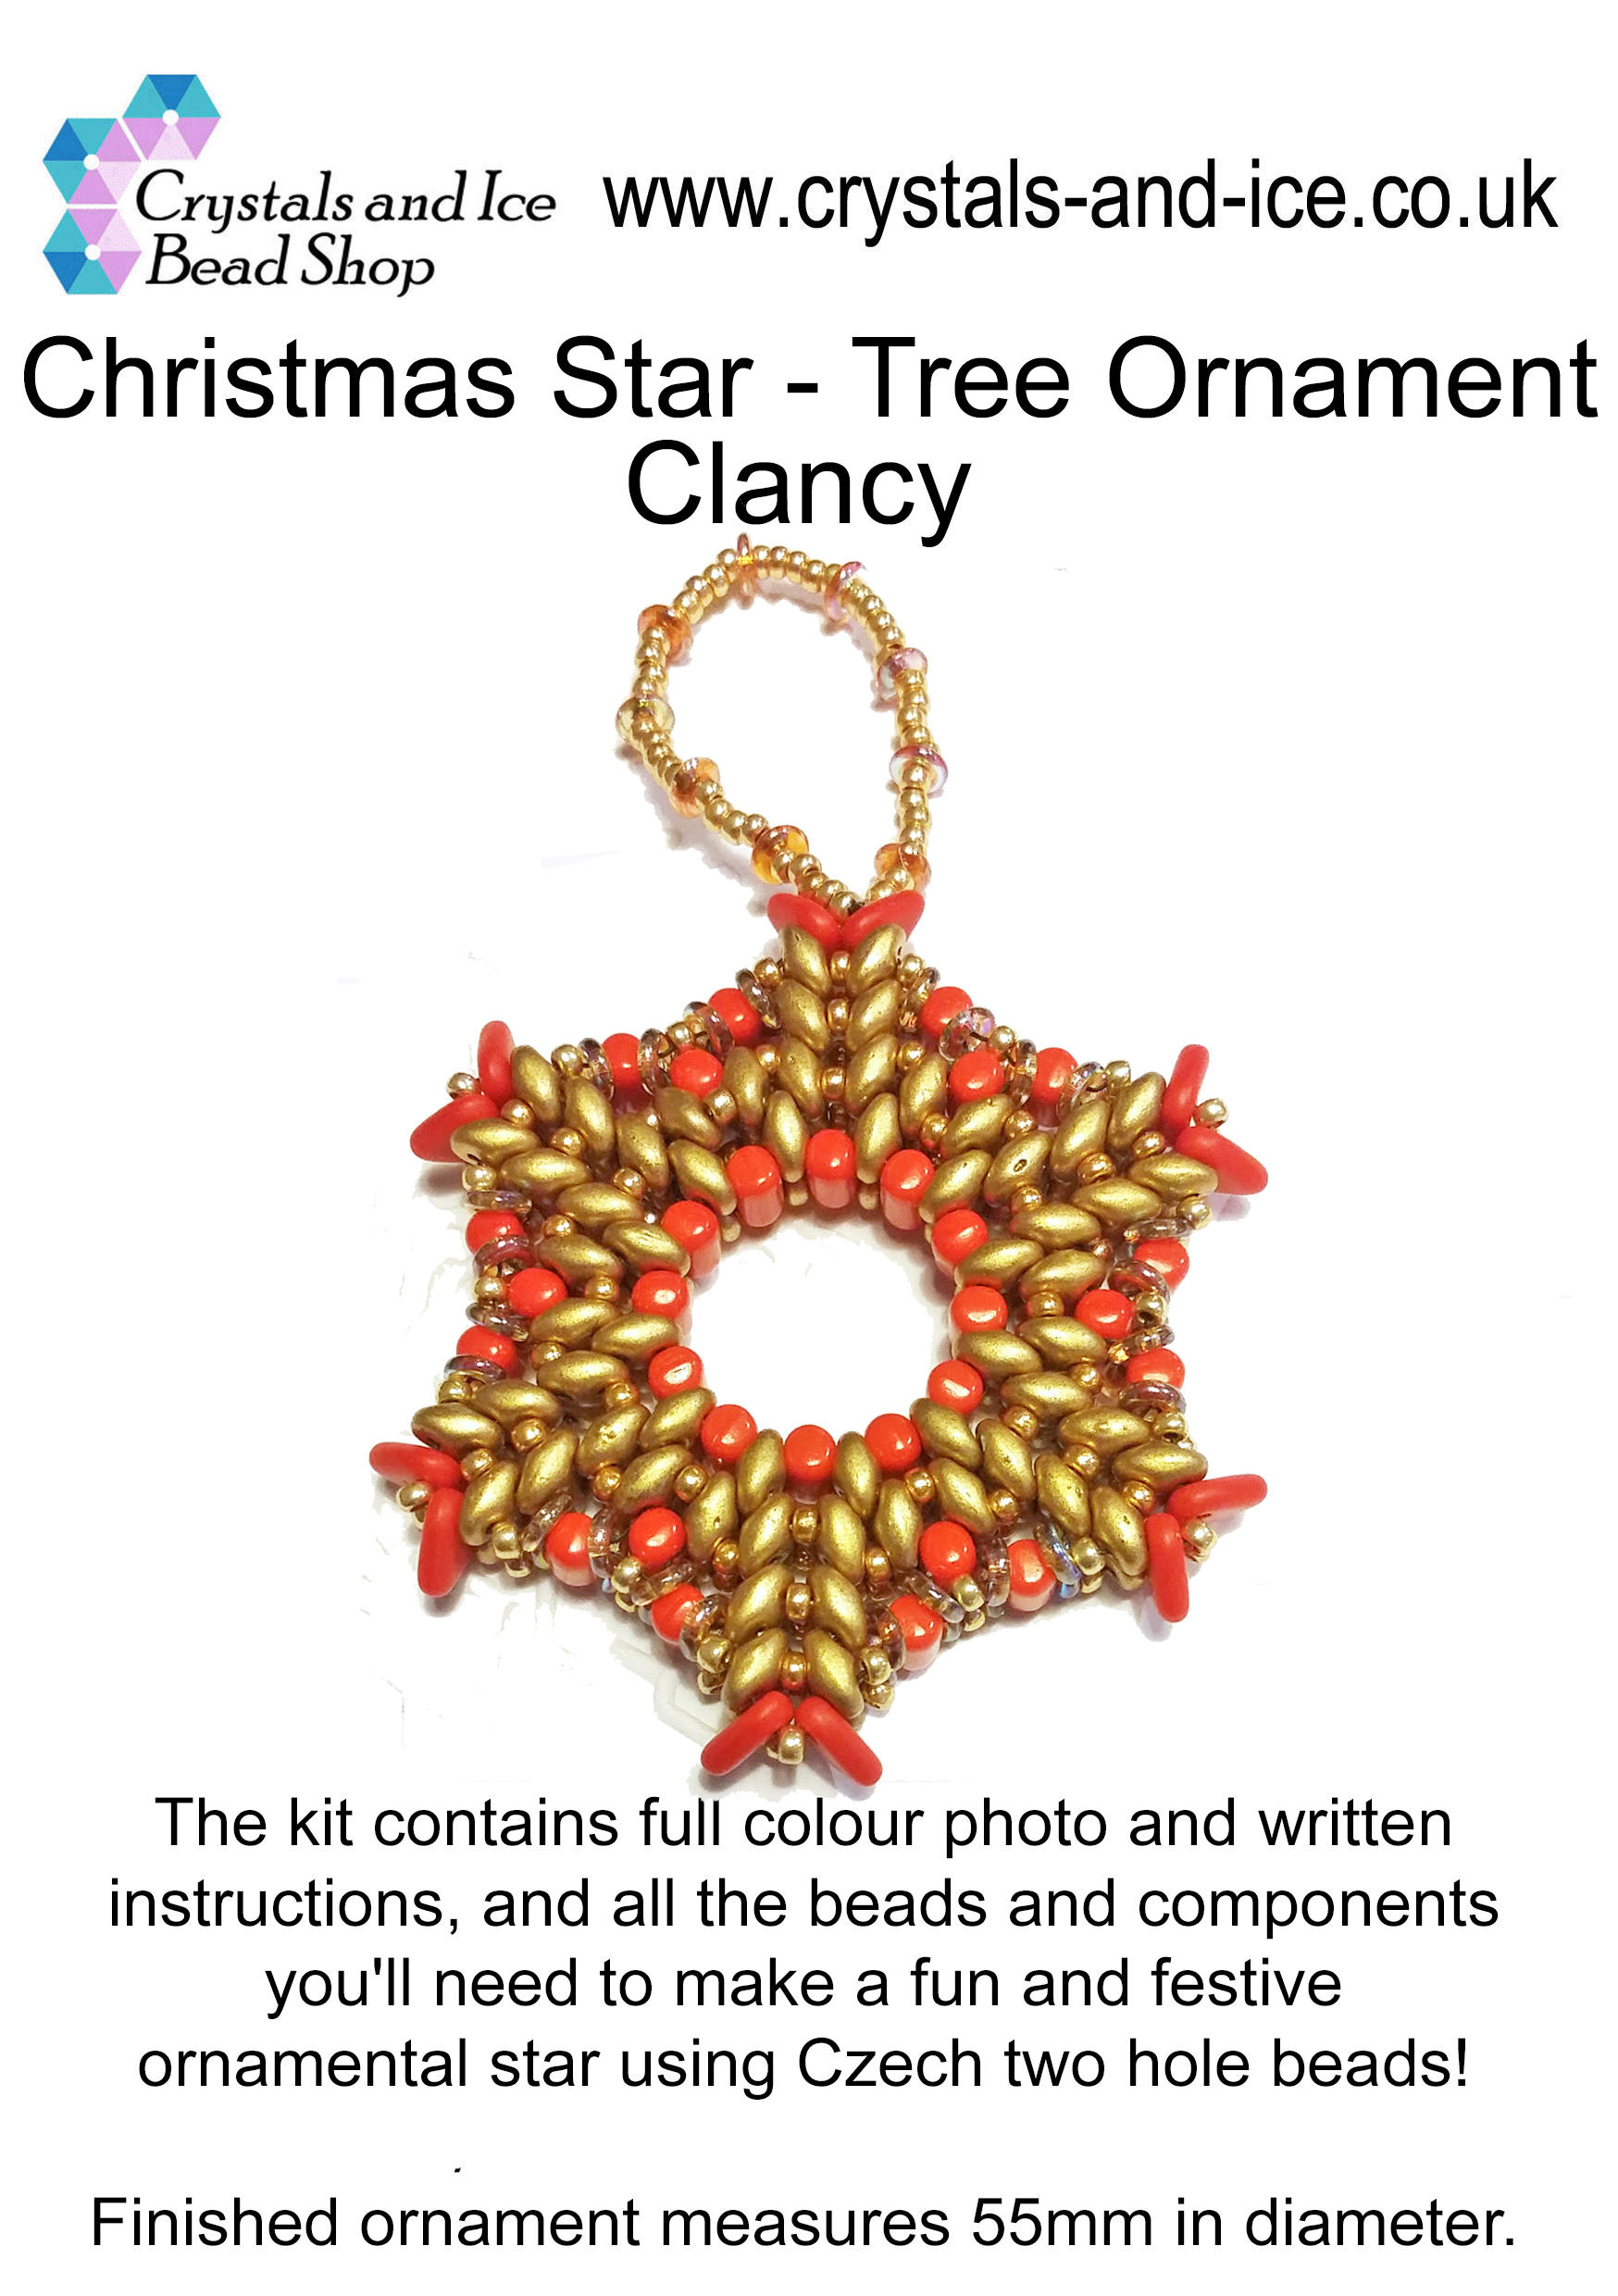 Christmas Star - Tree Ornament (Clancy)